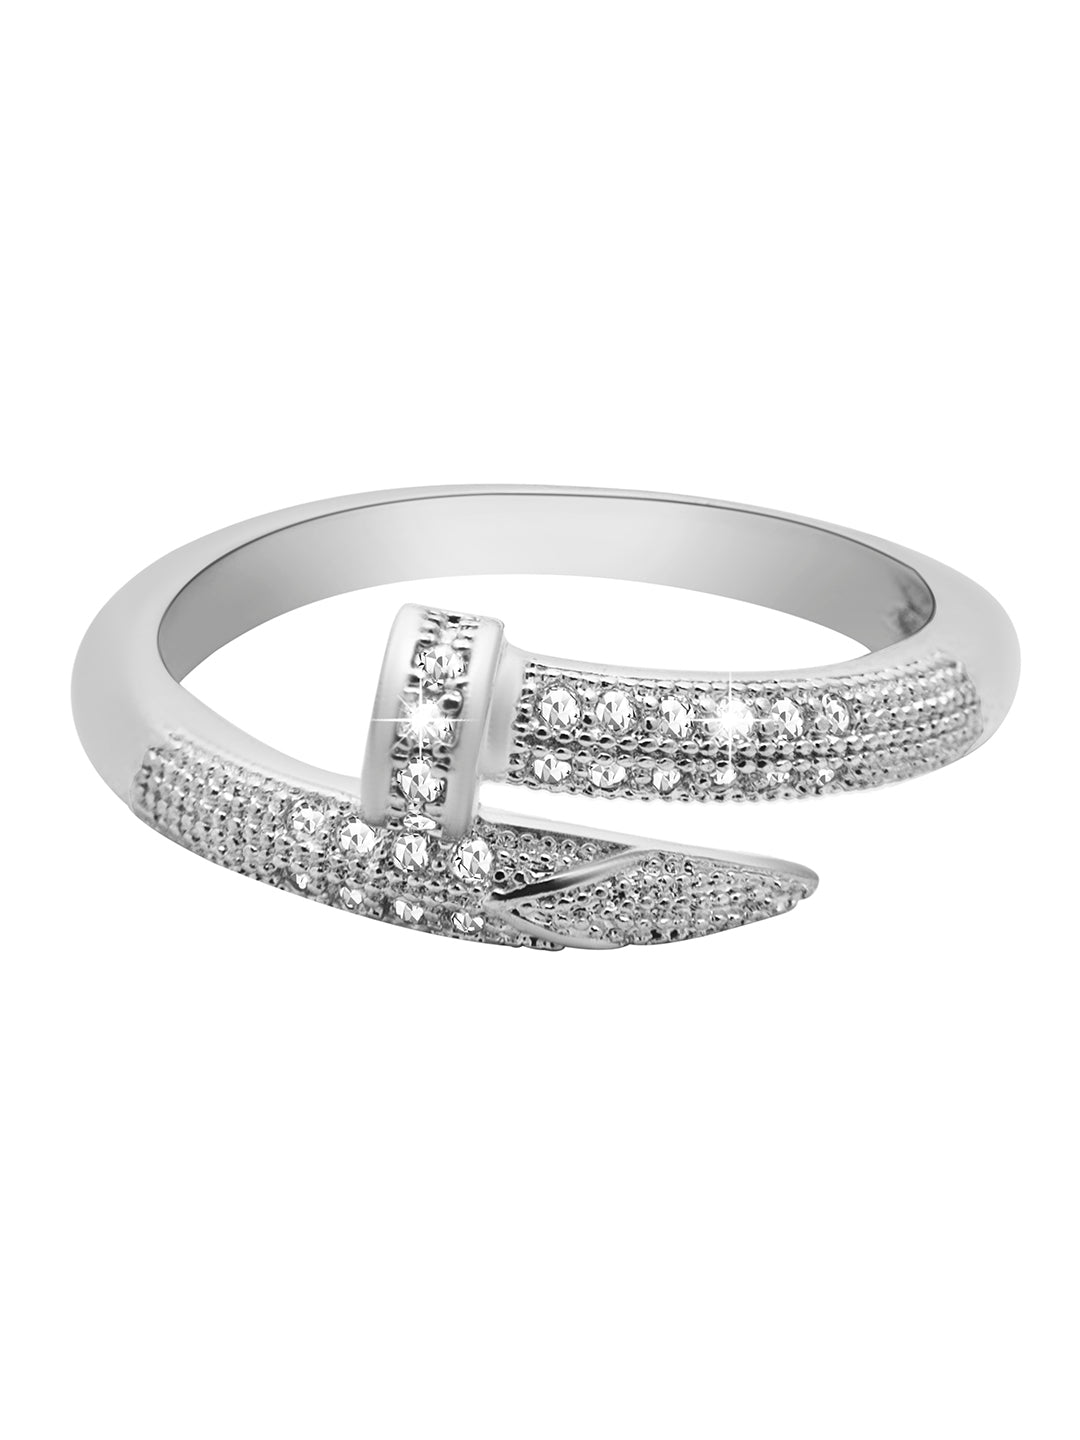 CRN4765400 - Clash de Cartier ring Diamonds - Pink gold, diamonds - Cartier